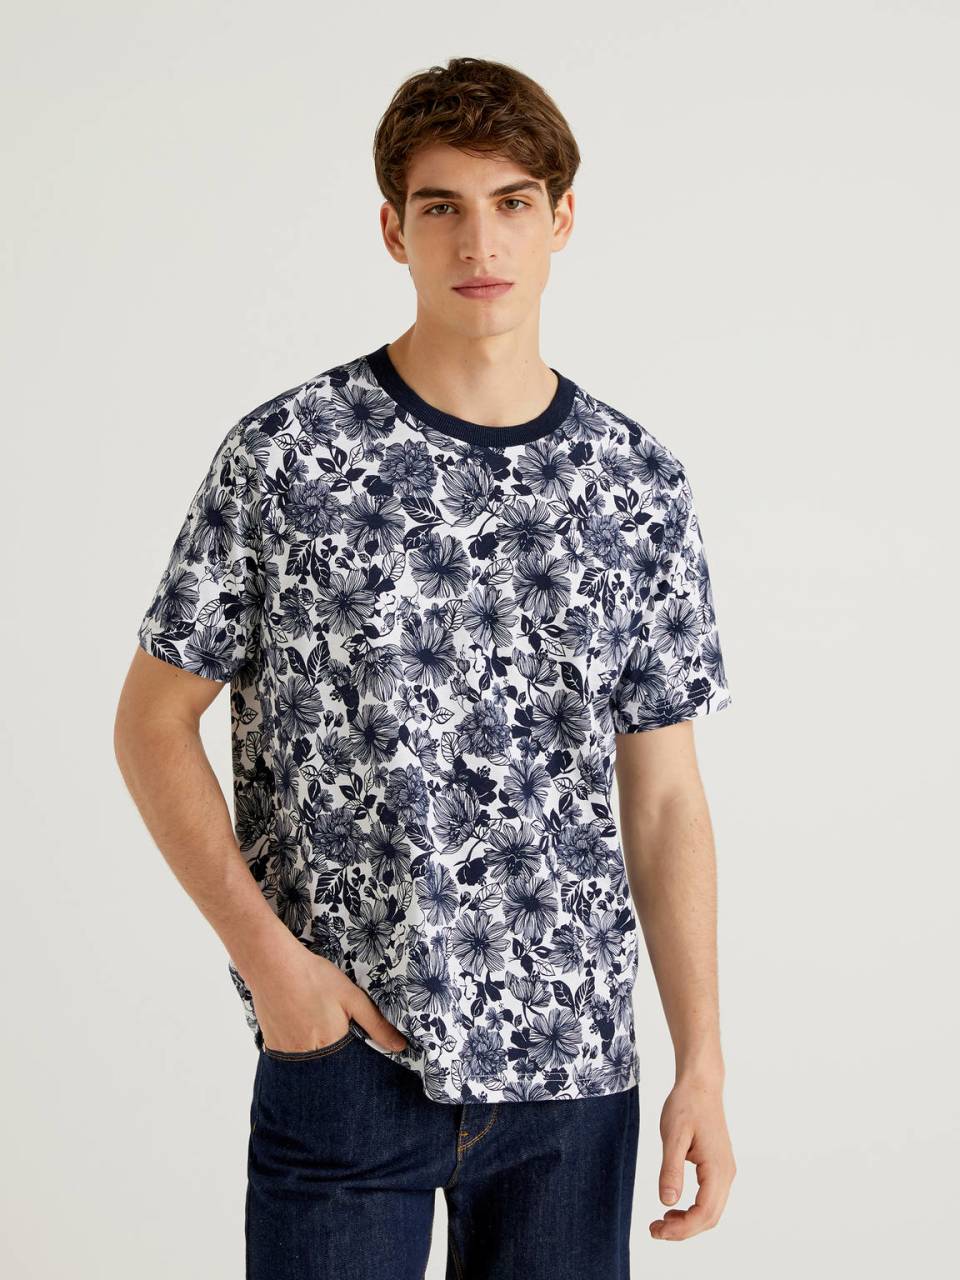 Benetton 100% cotton patterned t-shirt. 1